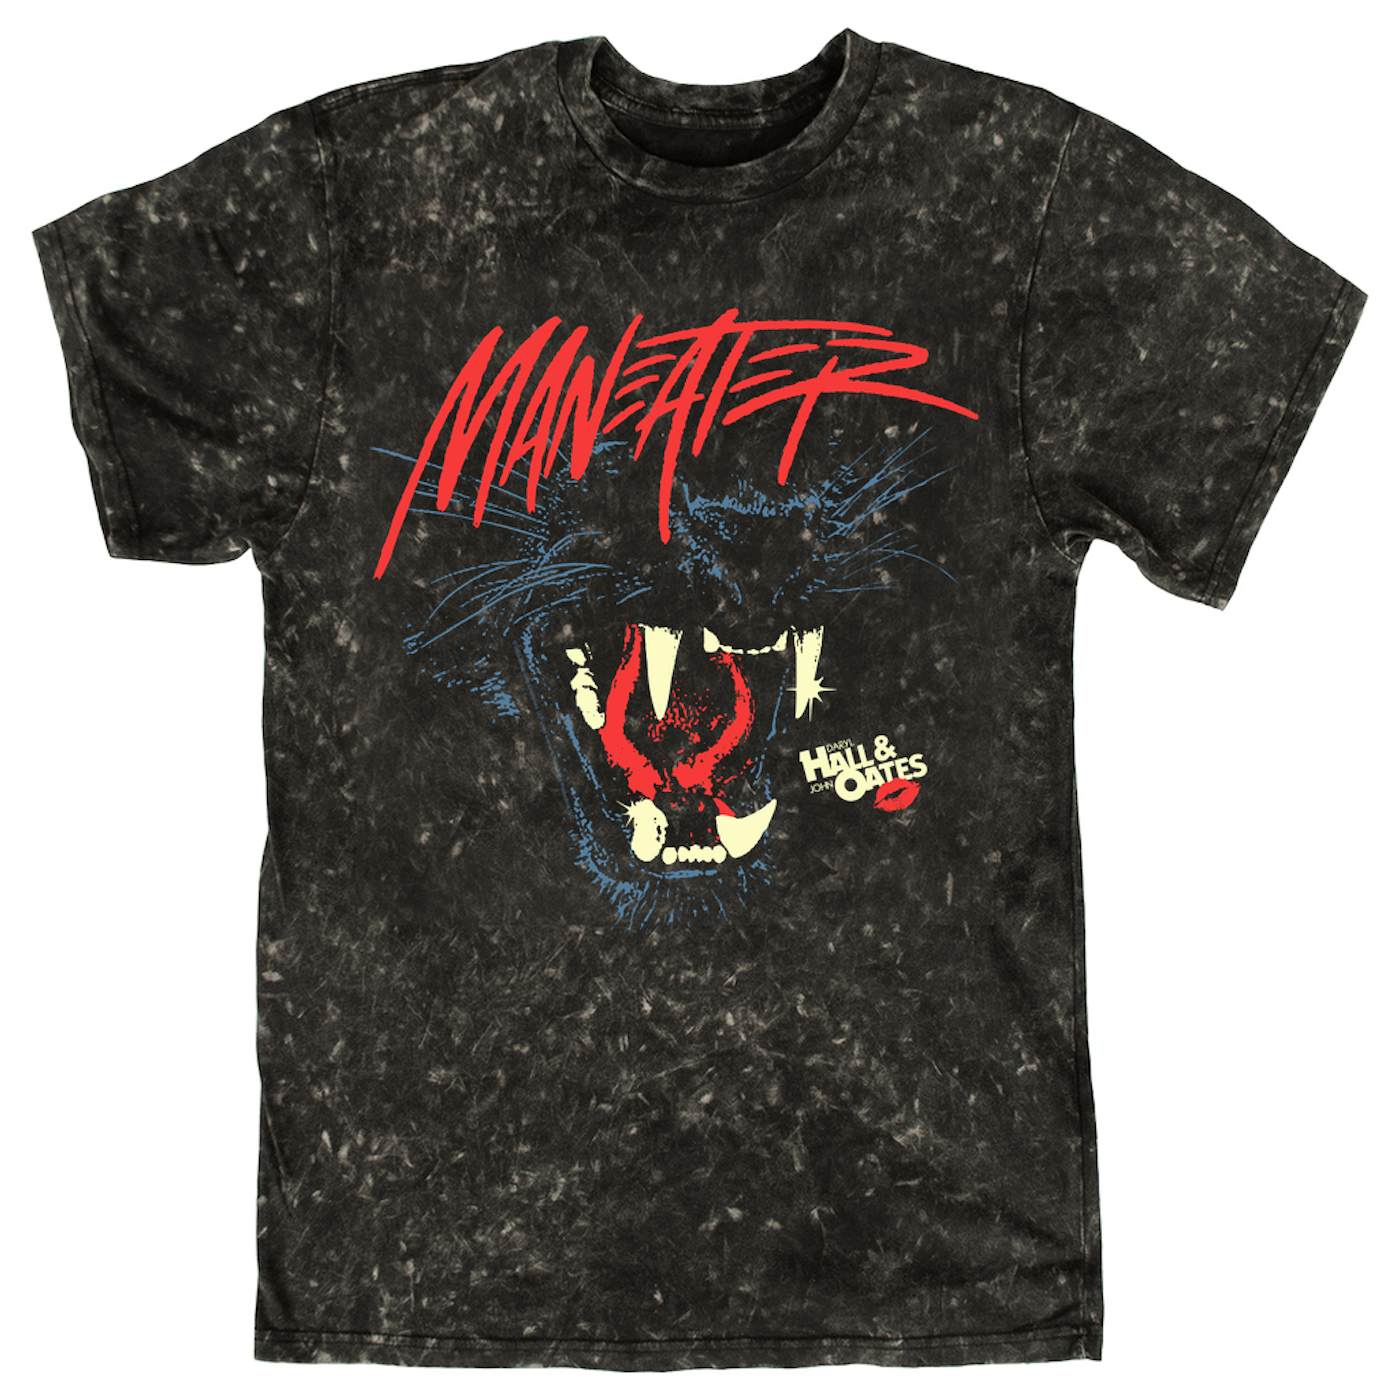 Daryl Hall & John Oates T-shirt | Maneater Hall & Oates Mineral Wash Shirt